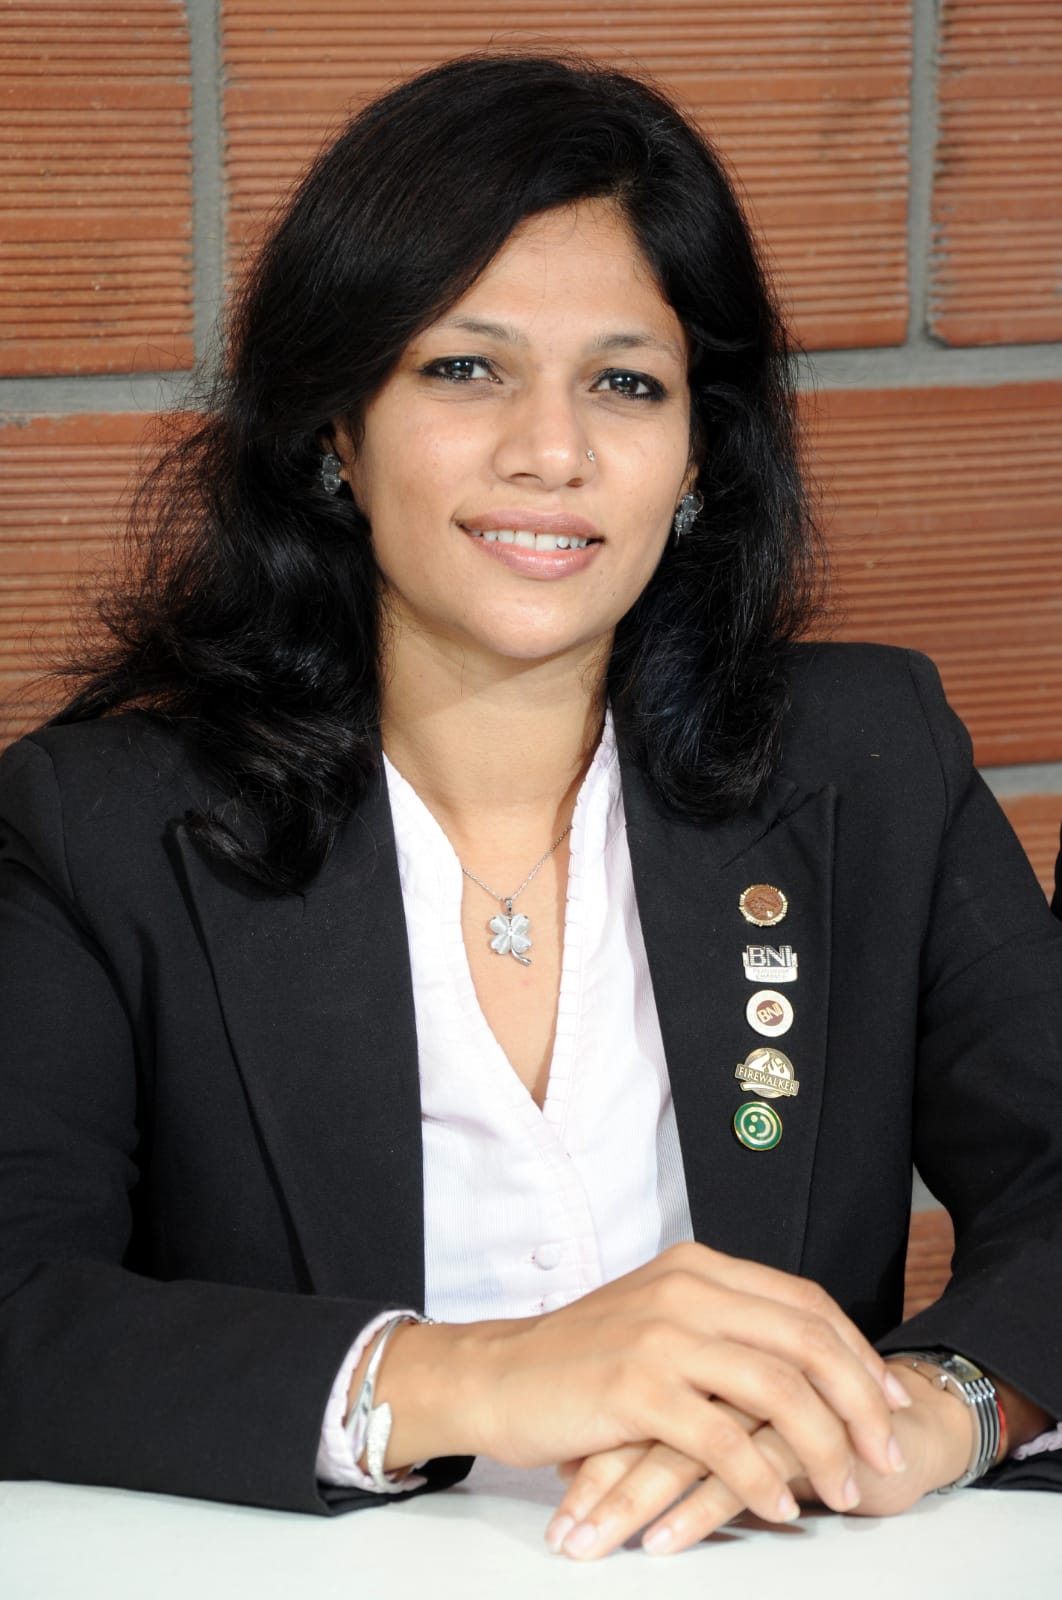 Meet the Polymath Entrepreneur Runjhun Gupta and Her Inspiring Story